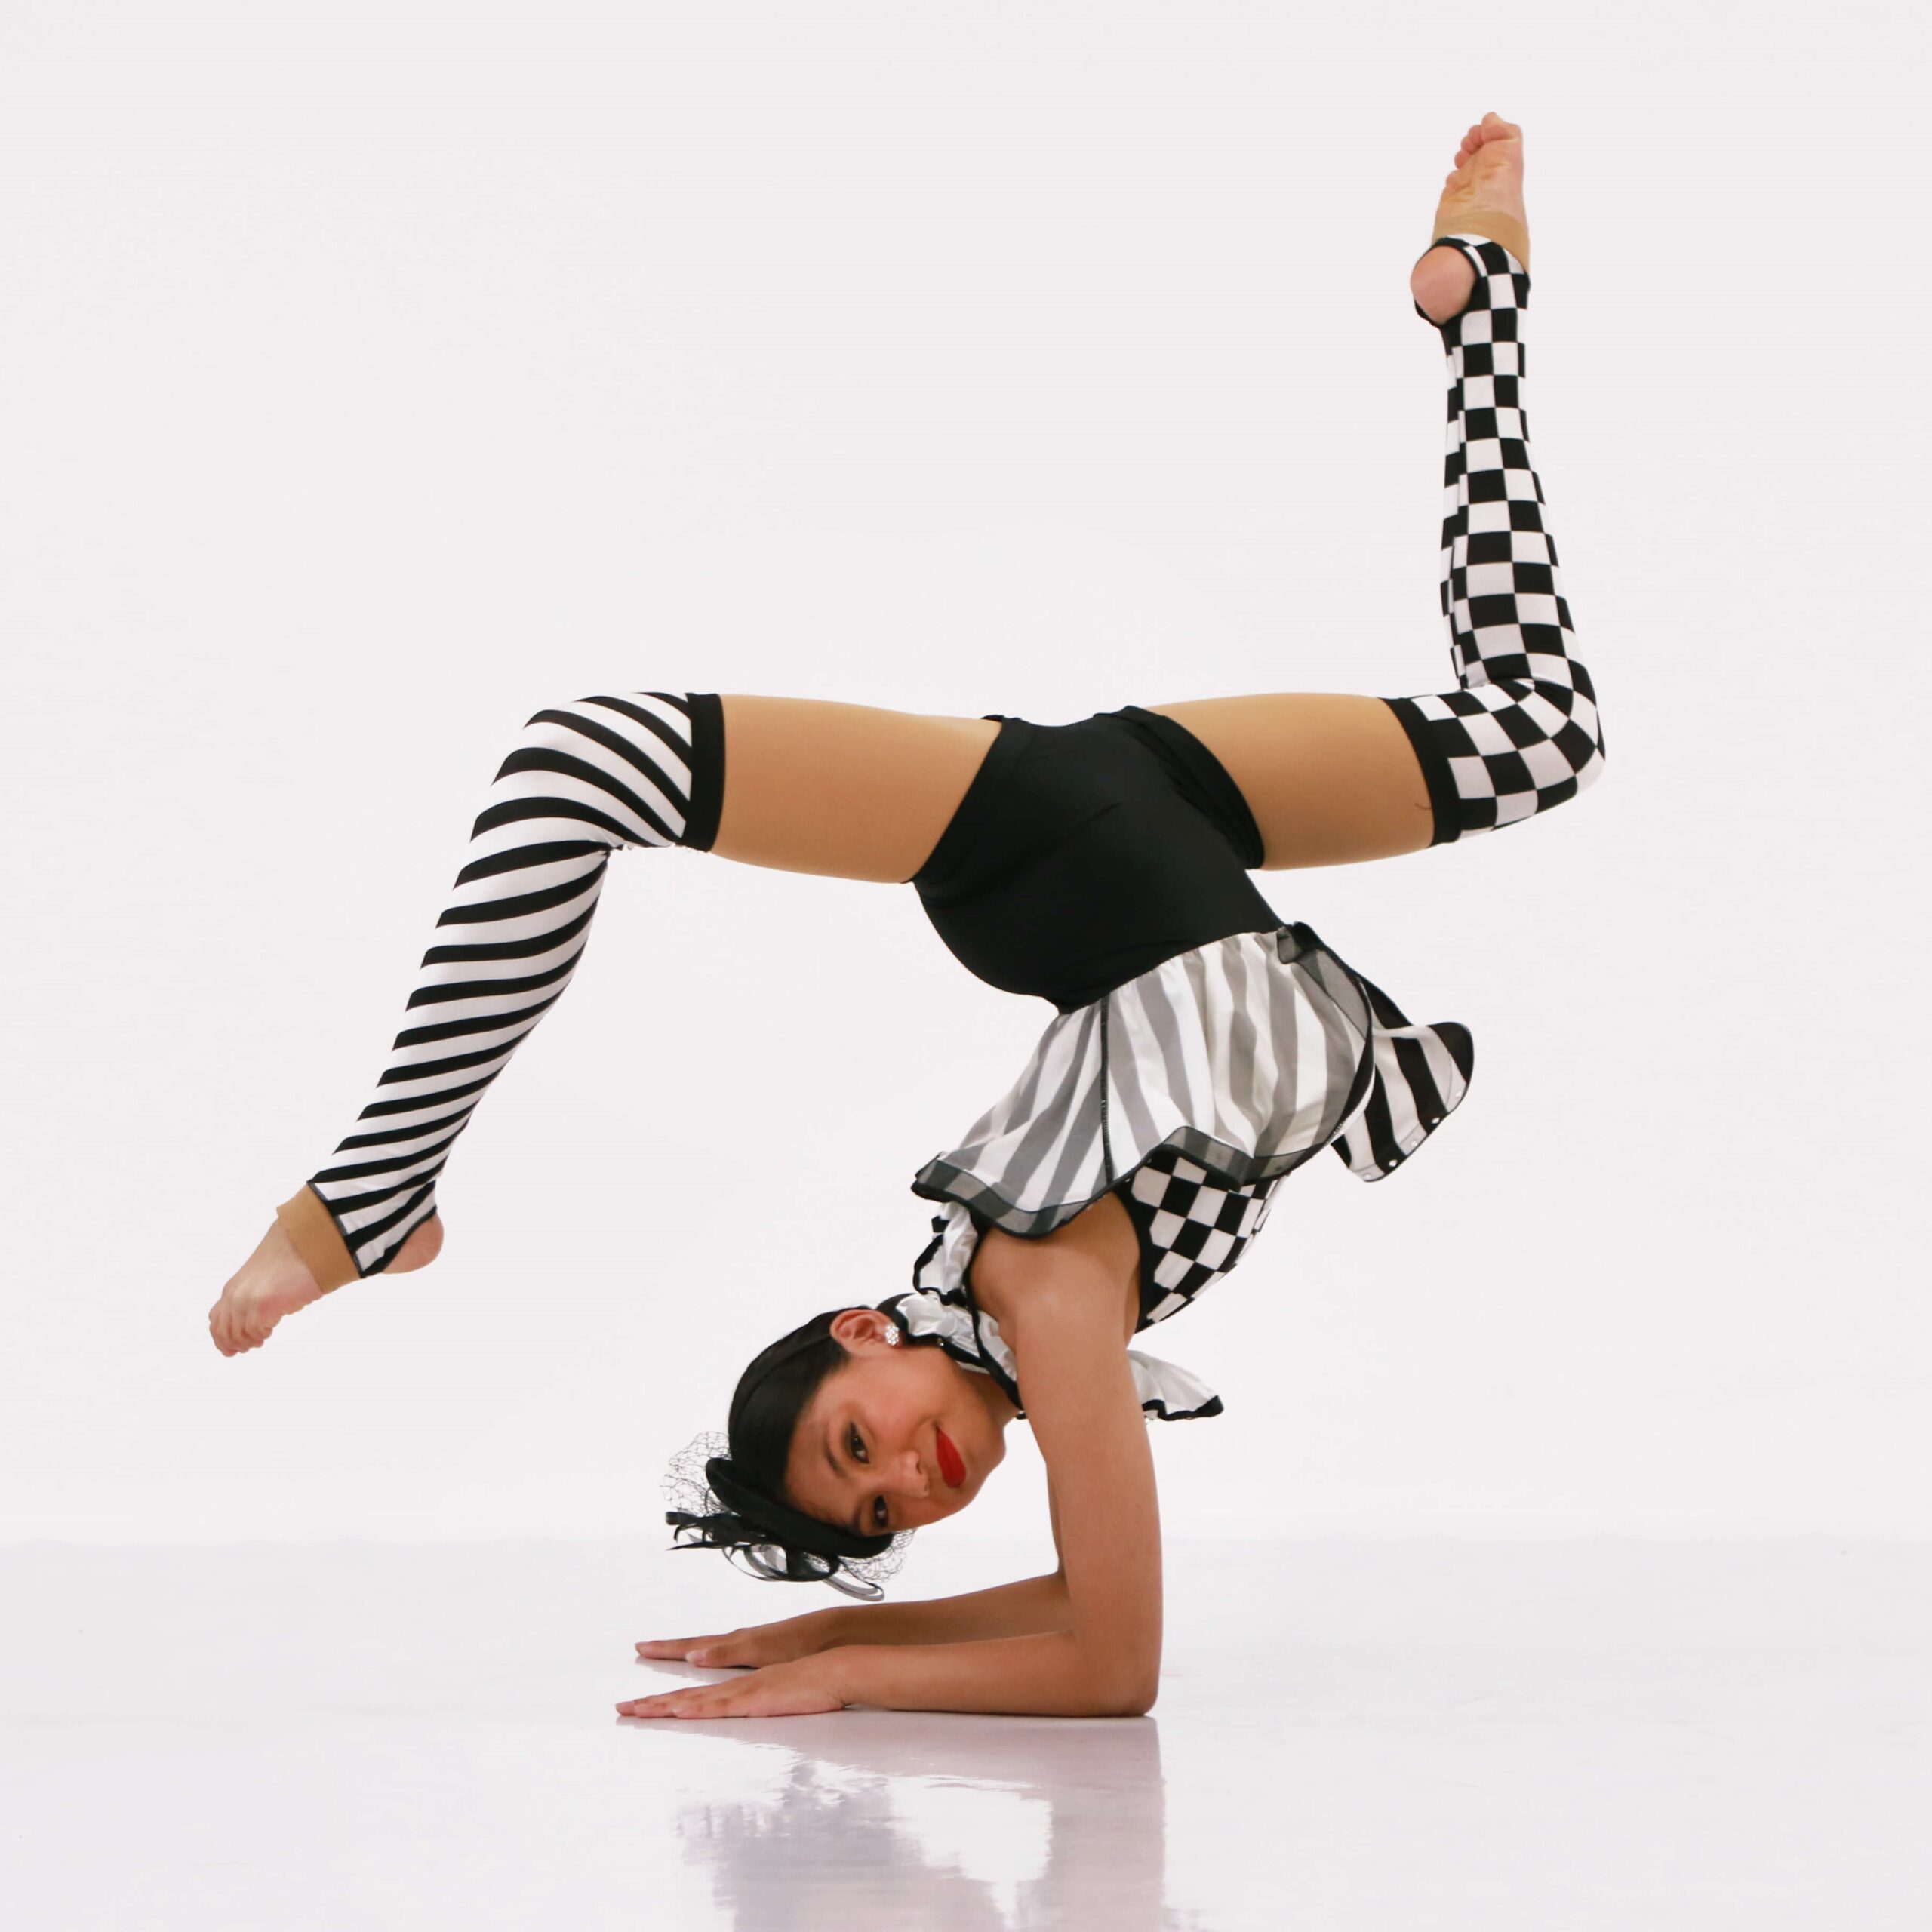 acro dance class dancer in Milton Ontario doing an upside down acrobatic dance pose